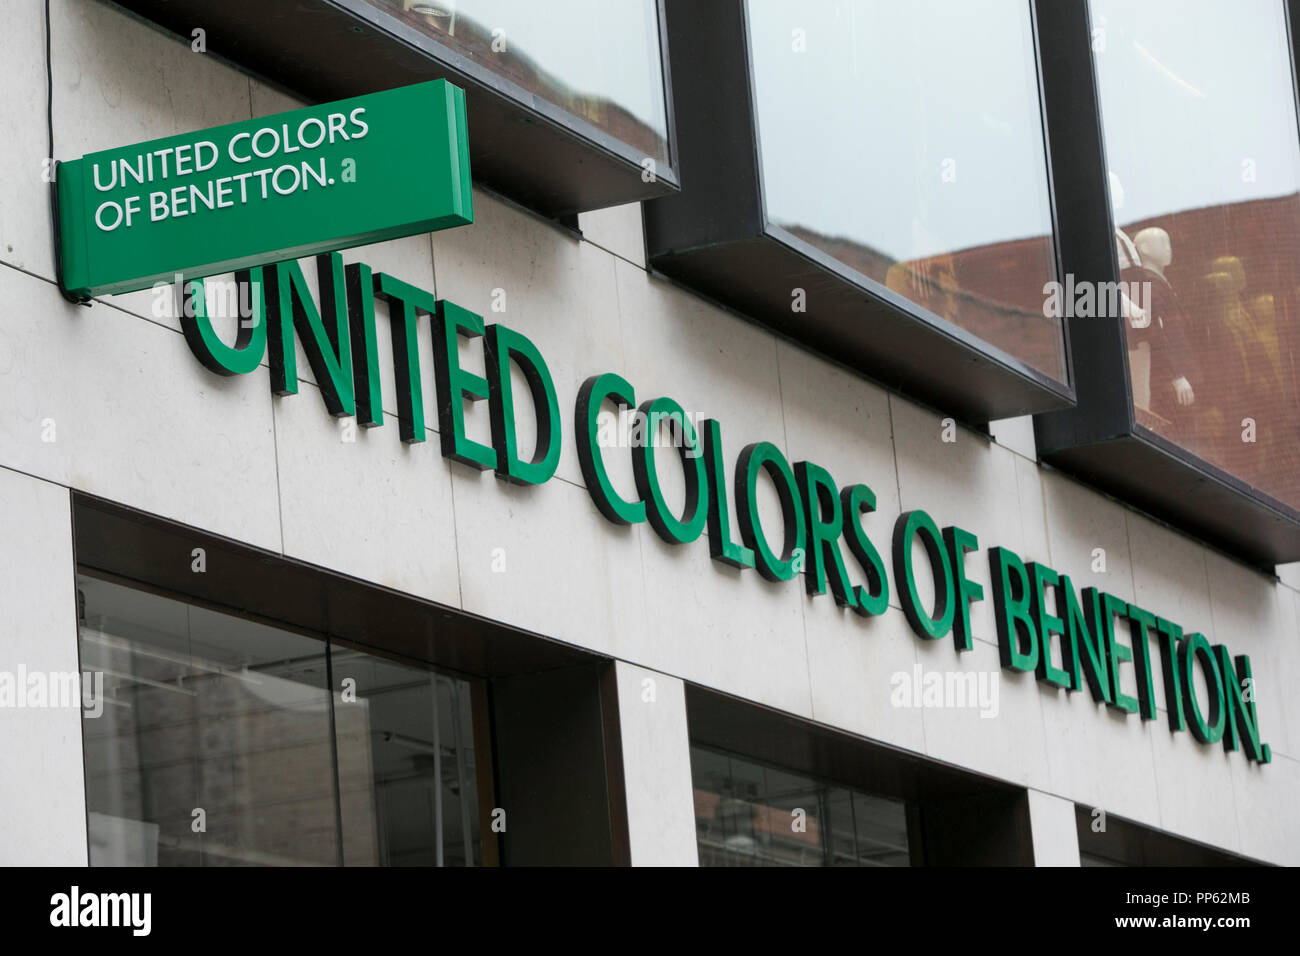 Colors Of Benetton Fotos e Imágenes de stock - Alamy